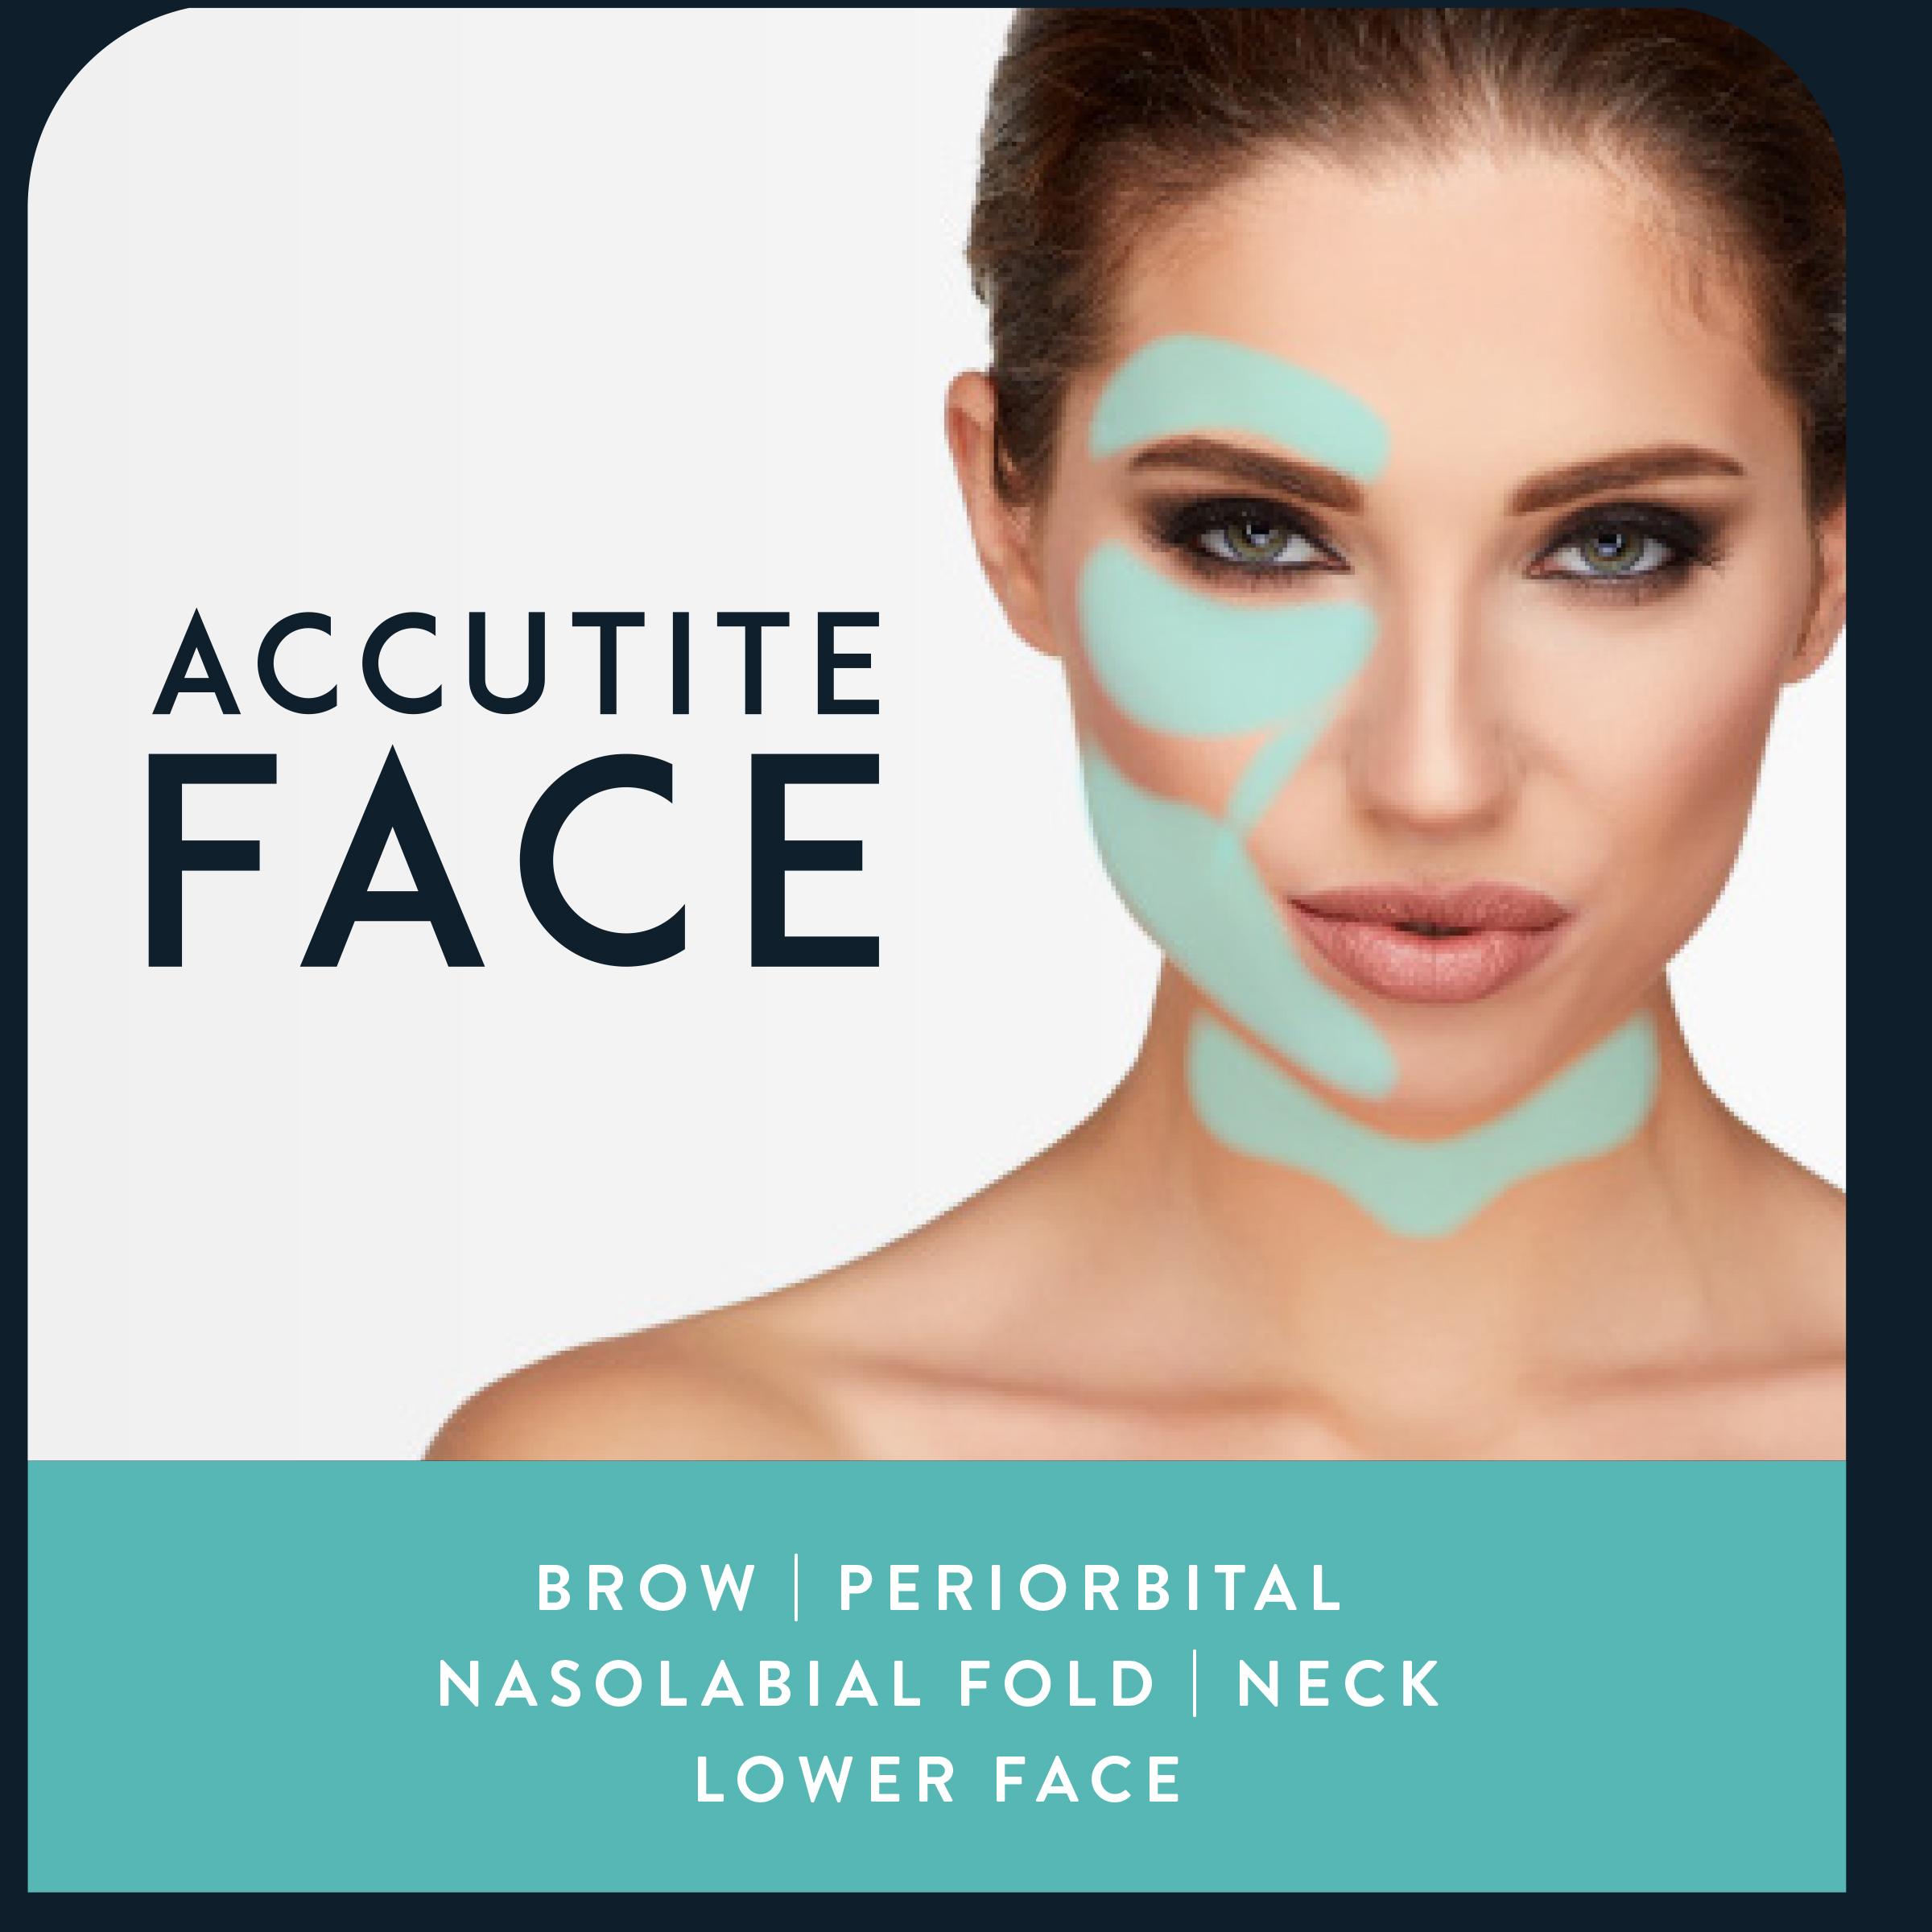 AccuTite Face flyer